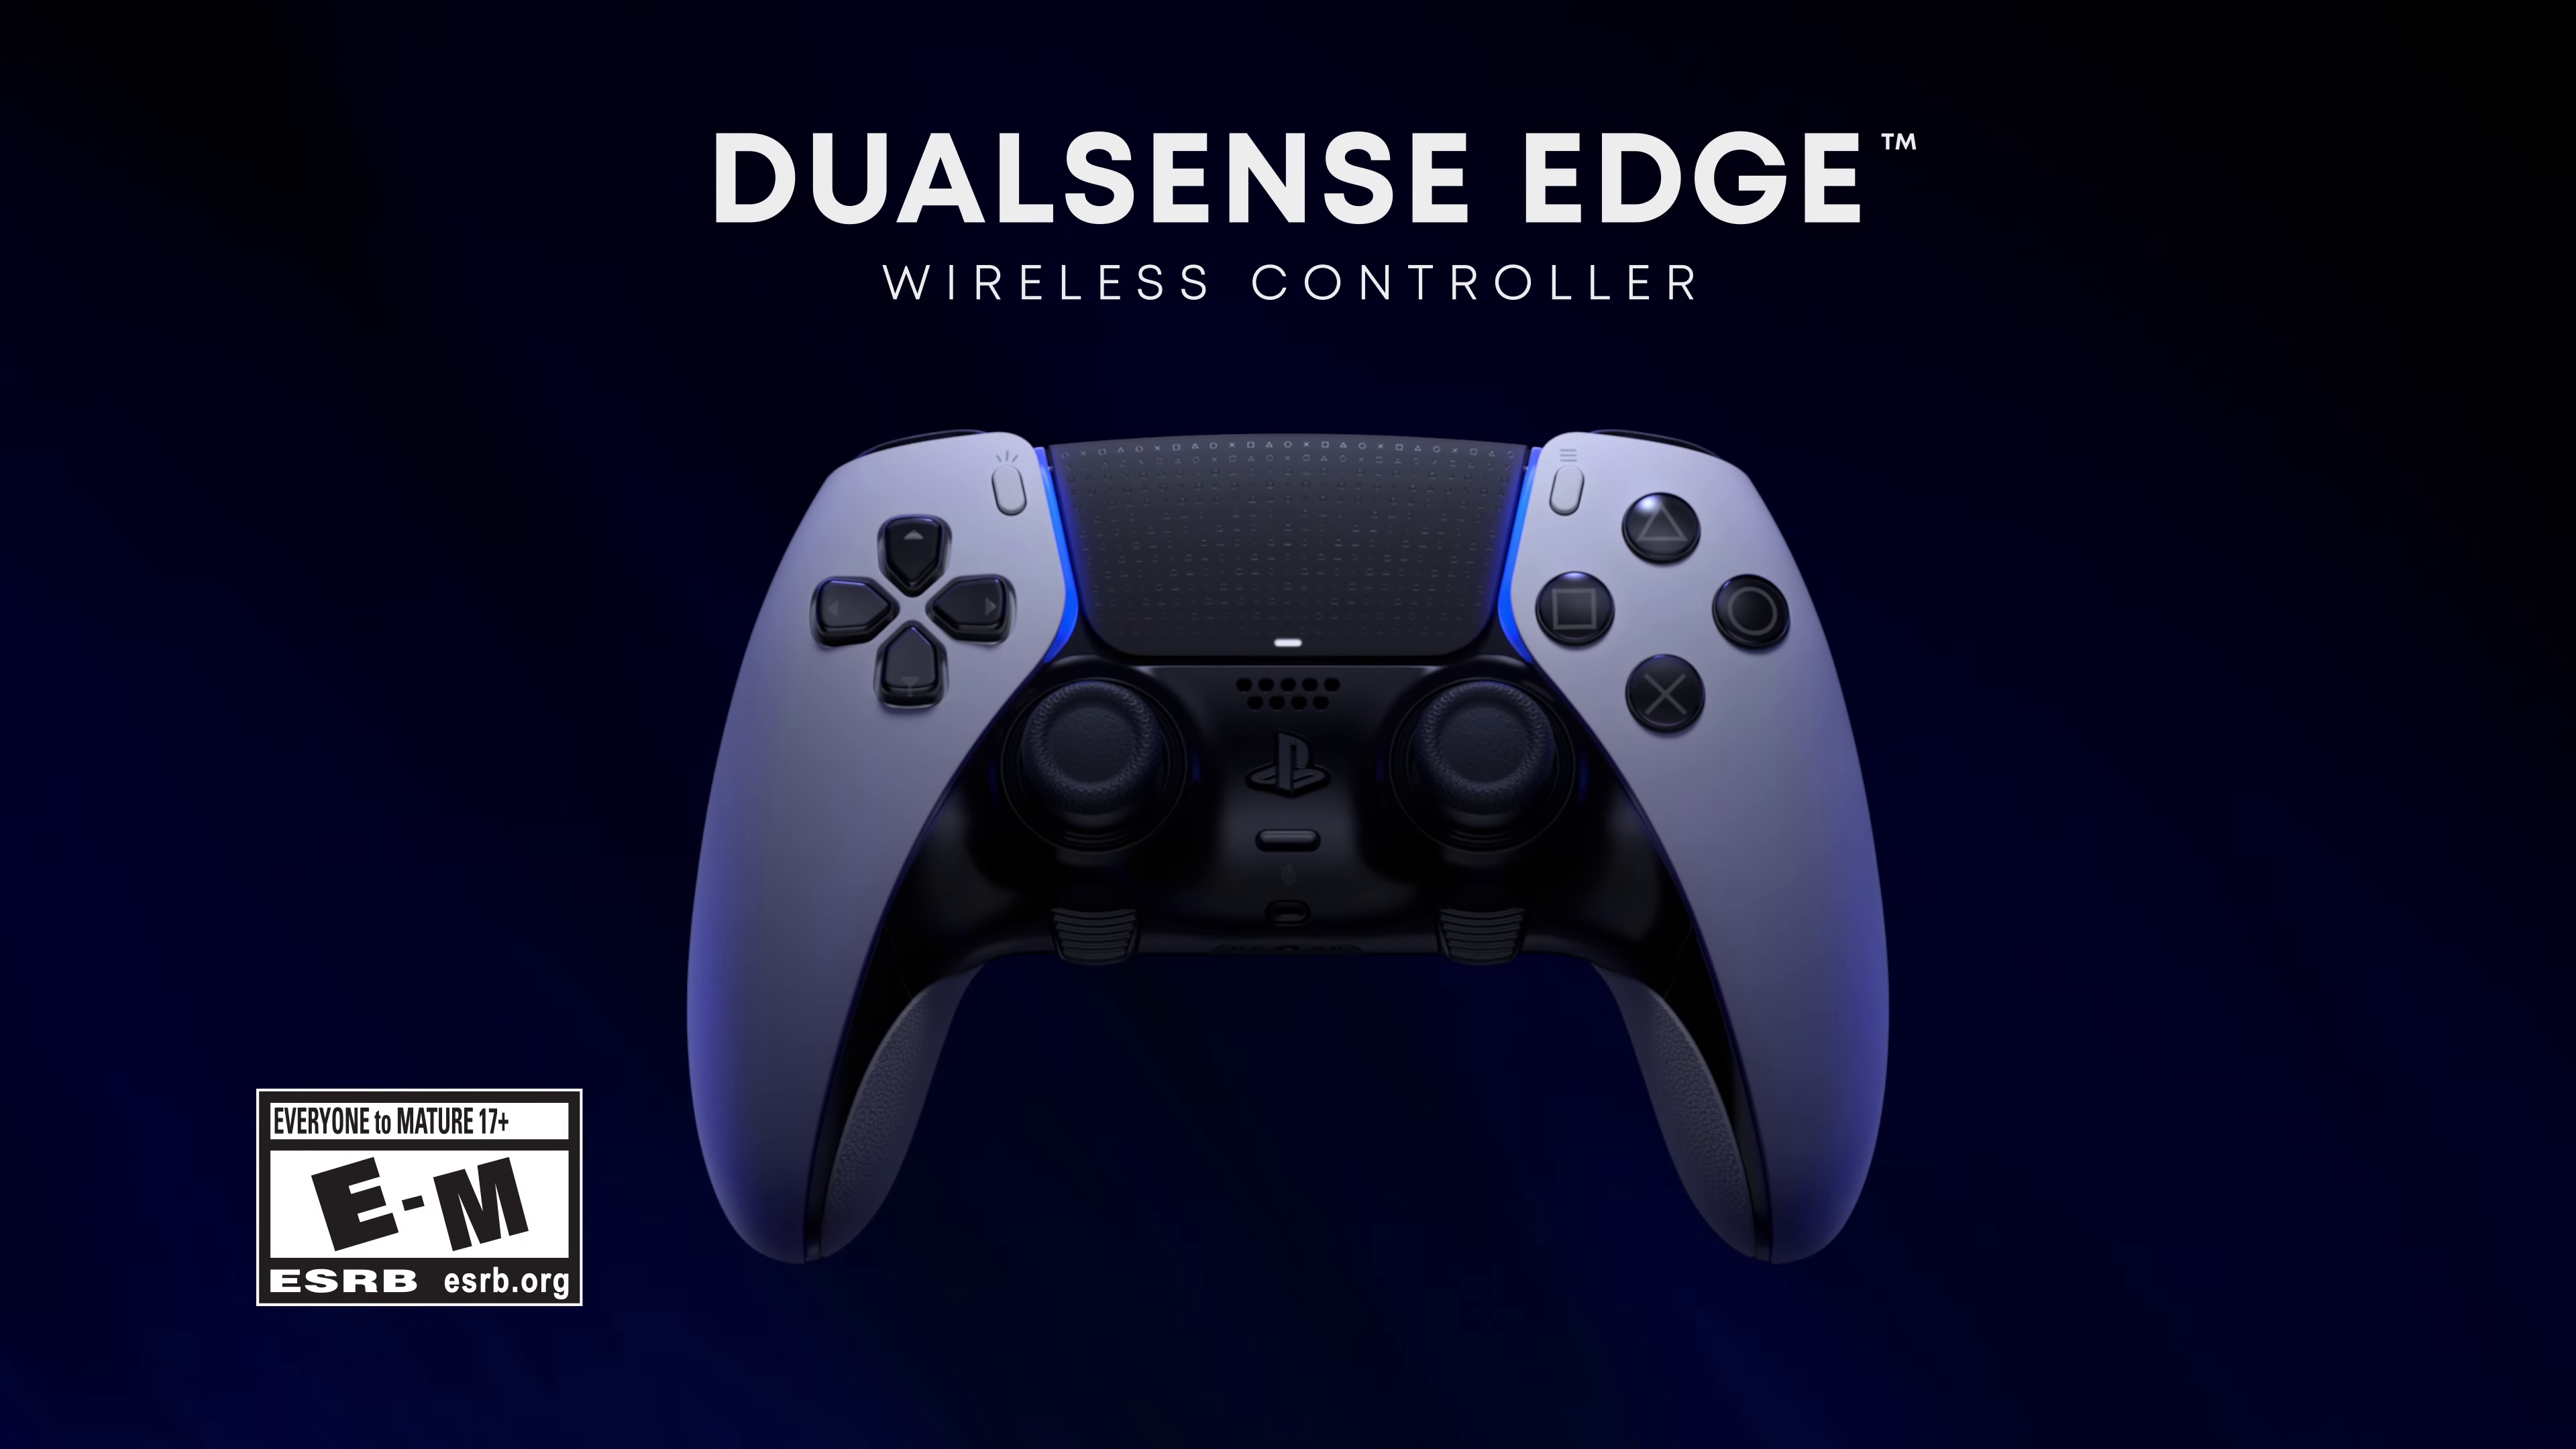 The new DualSense Edge Wireless Controller, PS5